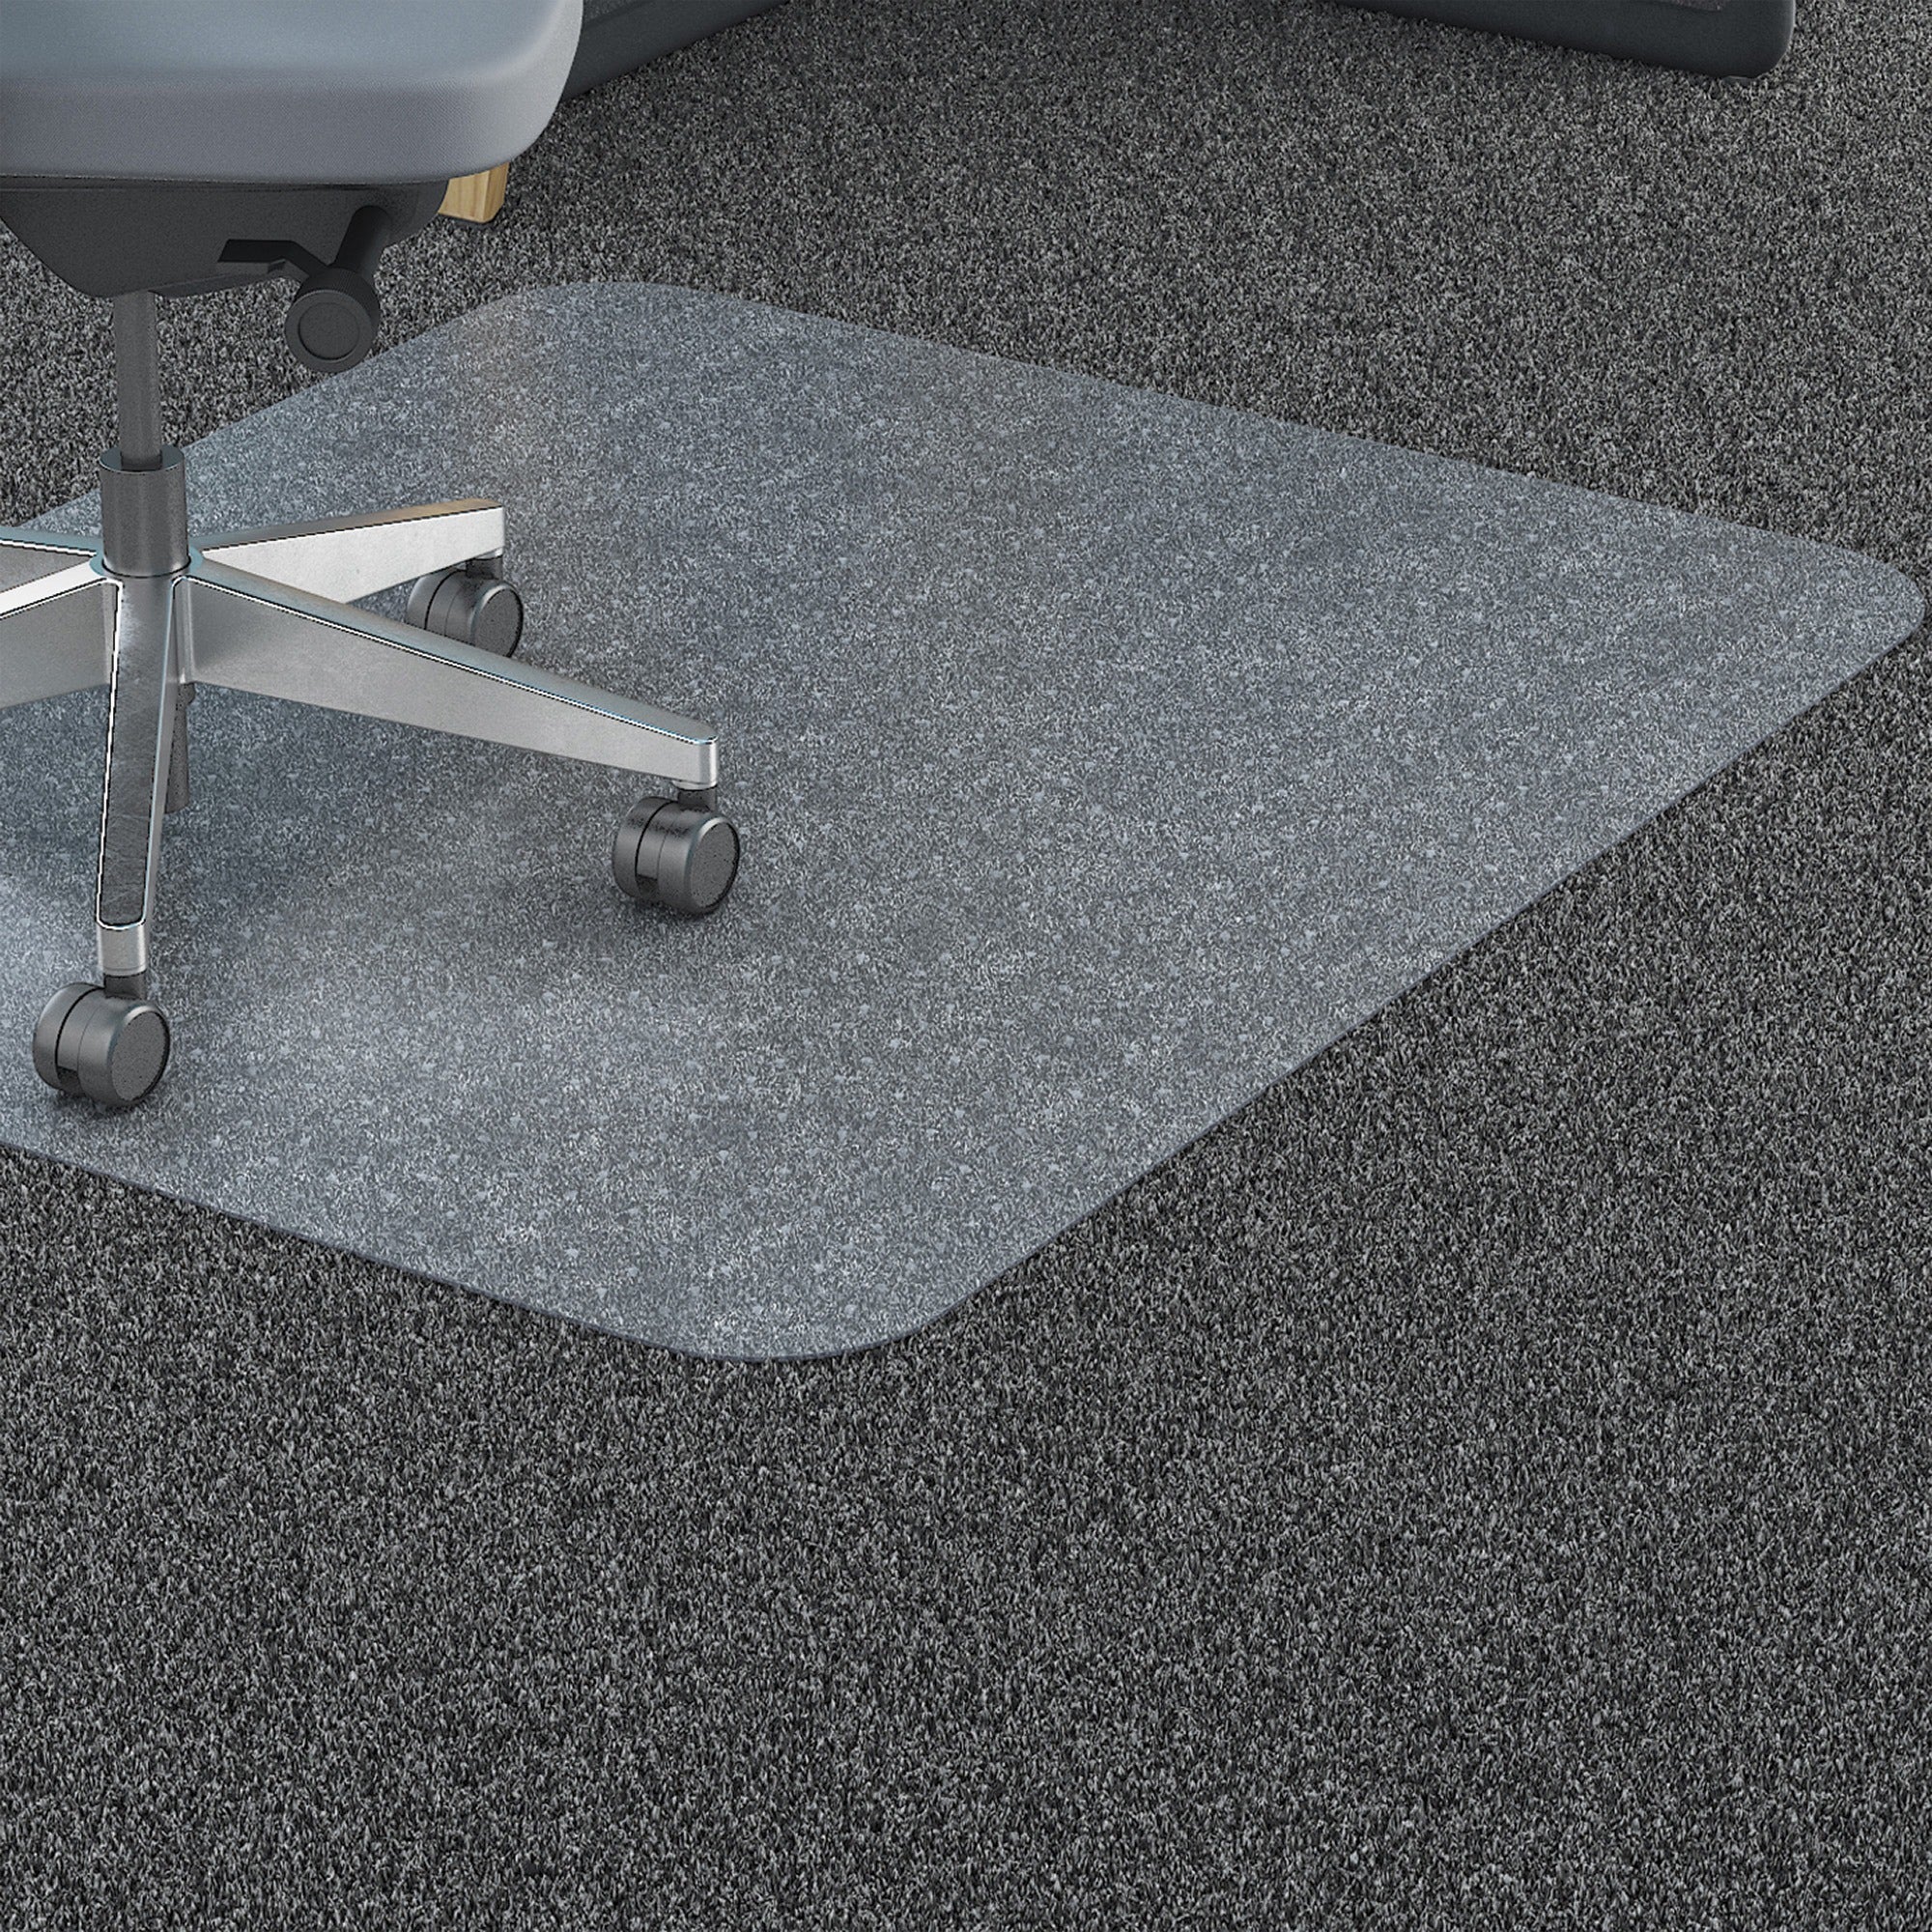 Lorell Big & Tall Chairmat - Carpeted Floor - 45" Width x 53" Depth - Rectangular - Polycarbonate - Clear - 1Each - 